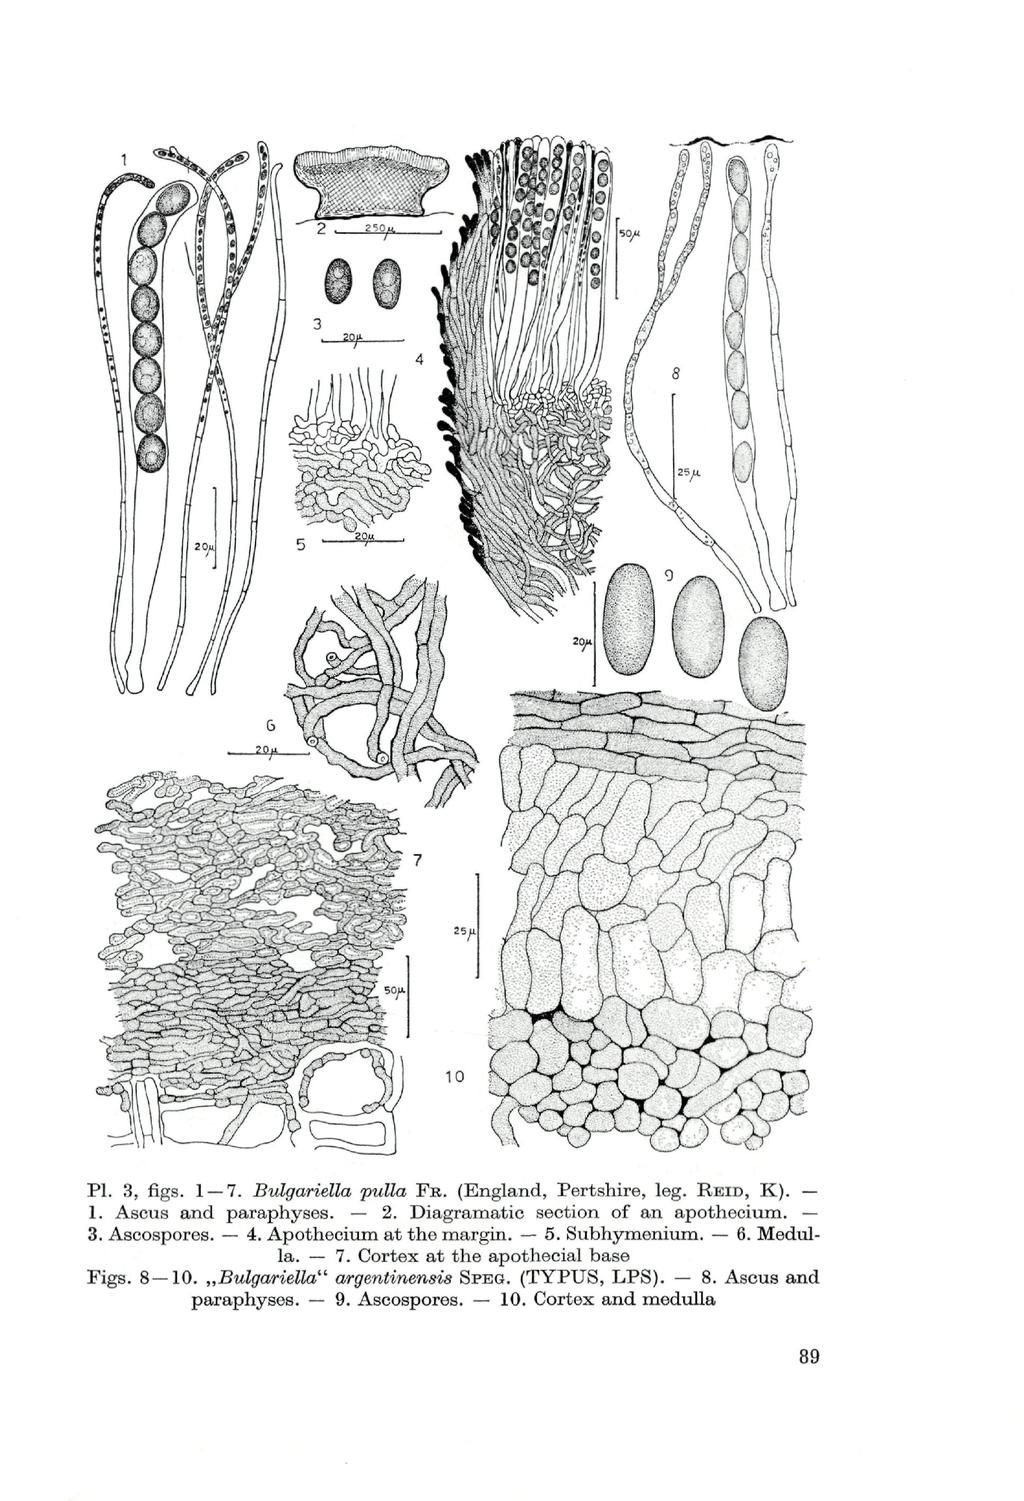 V PI. 3, figs. 1 7. Bulgariella pulla F R. (England, Pertshire, leg. REID, K). 1. Ascus and paraphyses. 2. Diagramatic section of an apothecium. 3. Ascospores. 4.